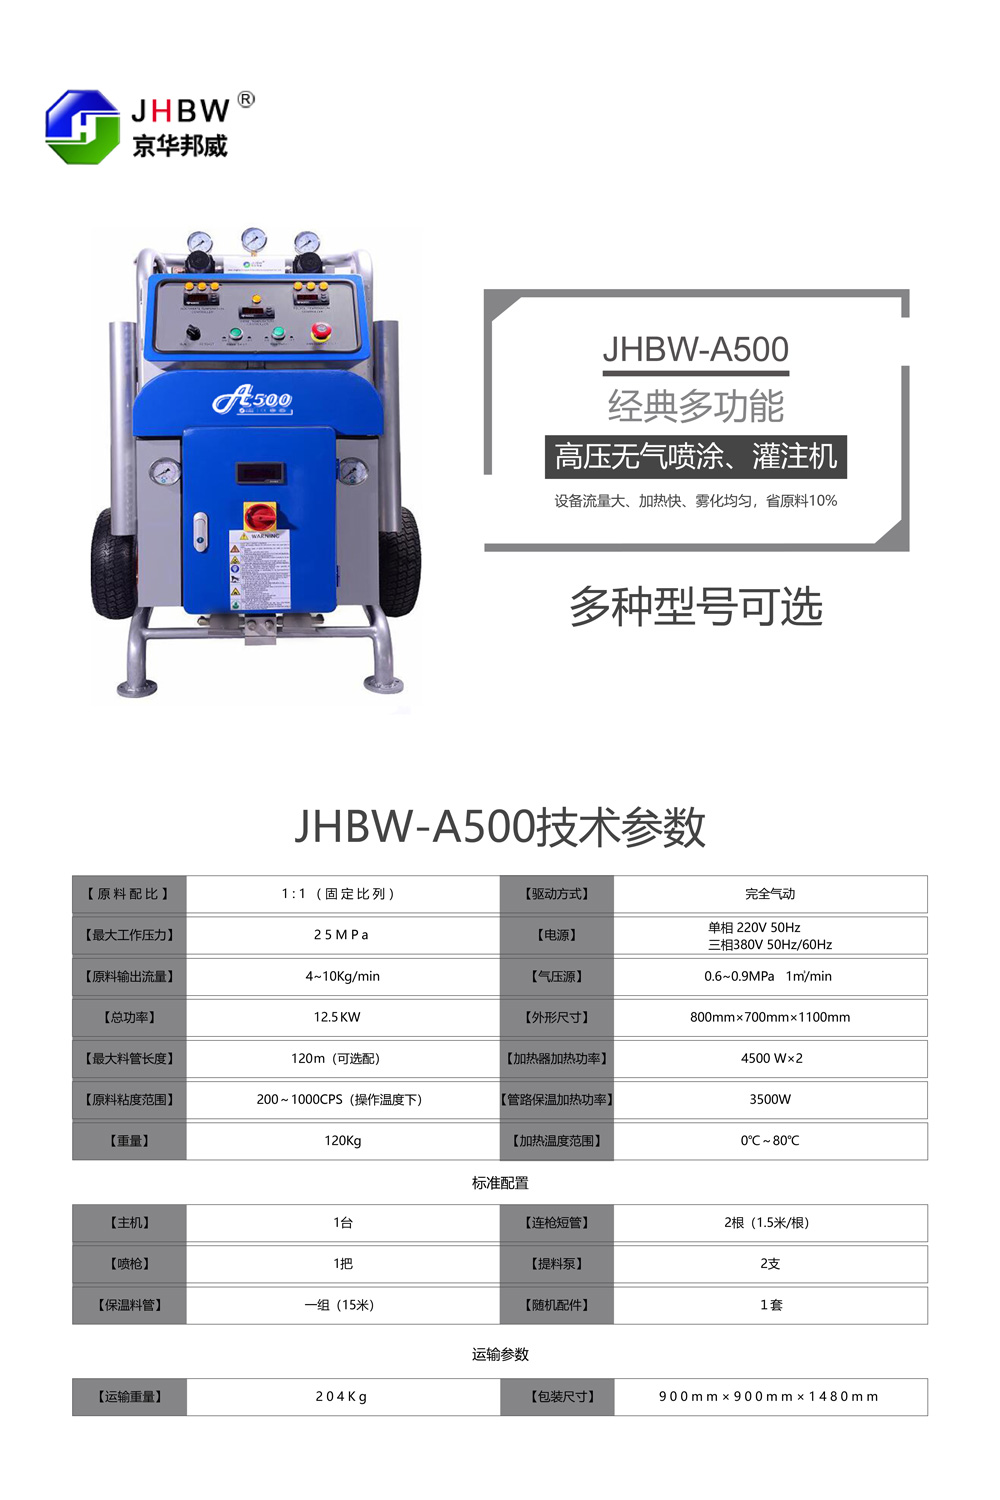 JHBW-A500聚氨酯喷涂设备